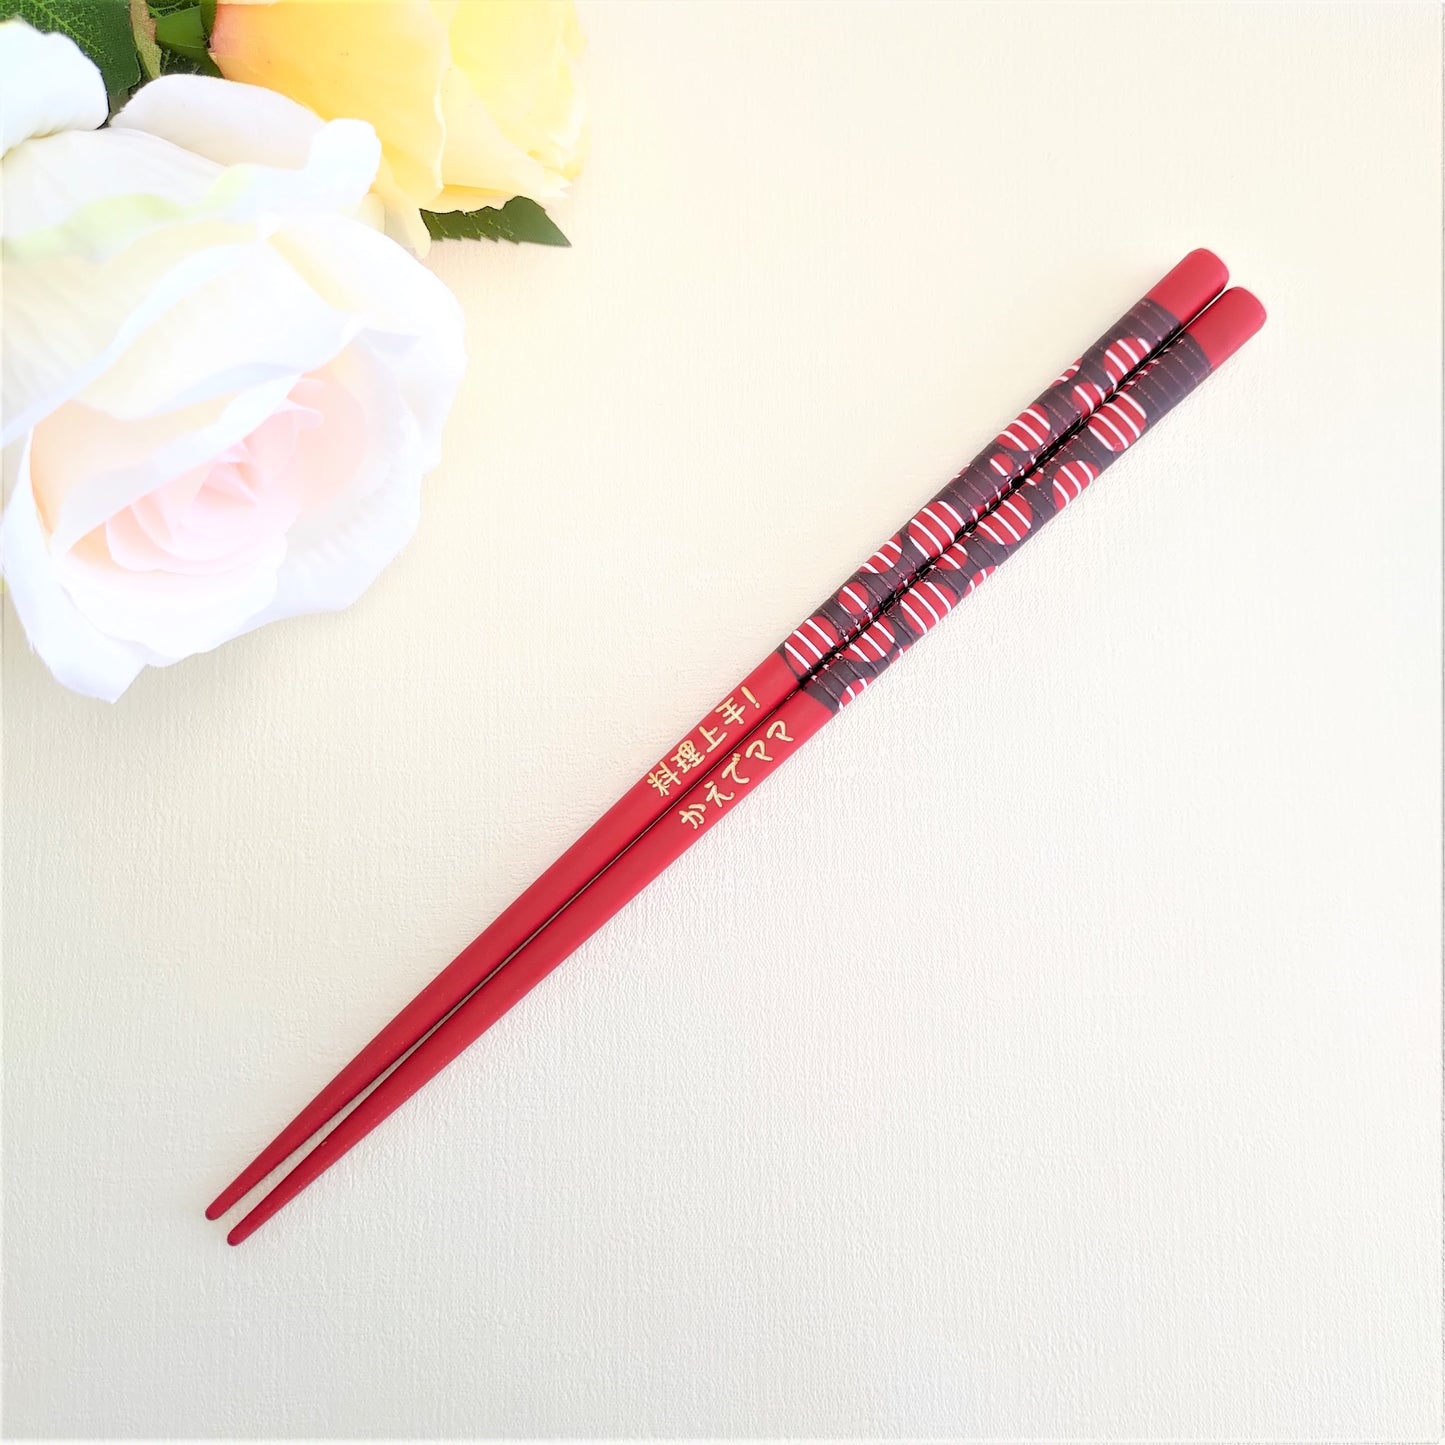 Polka dots original design Japanese chopsticks black red - SINGLE PAIR